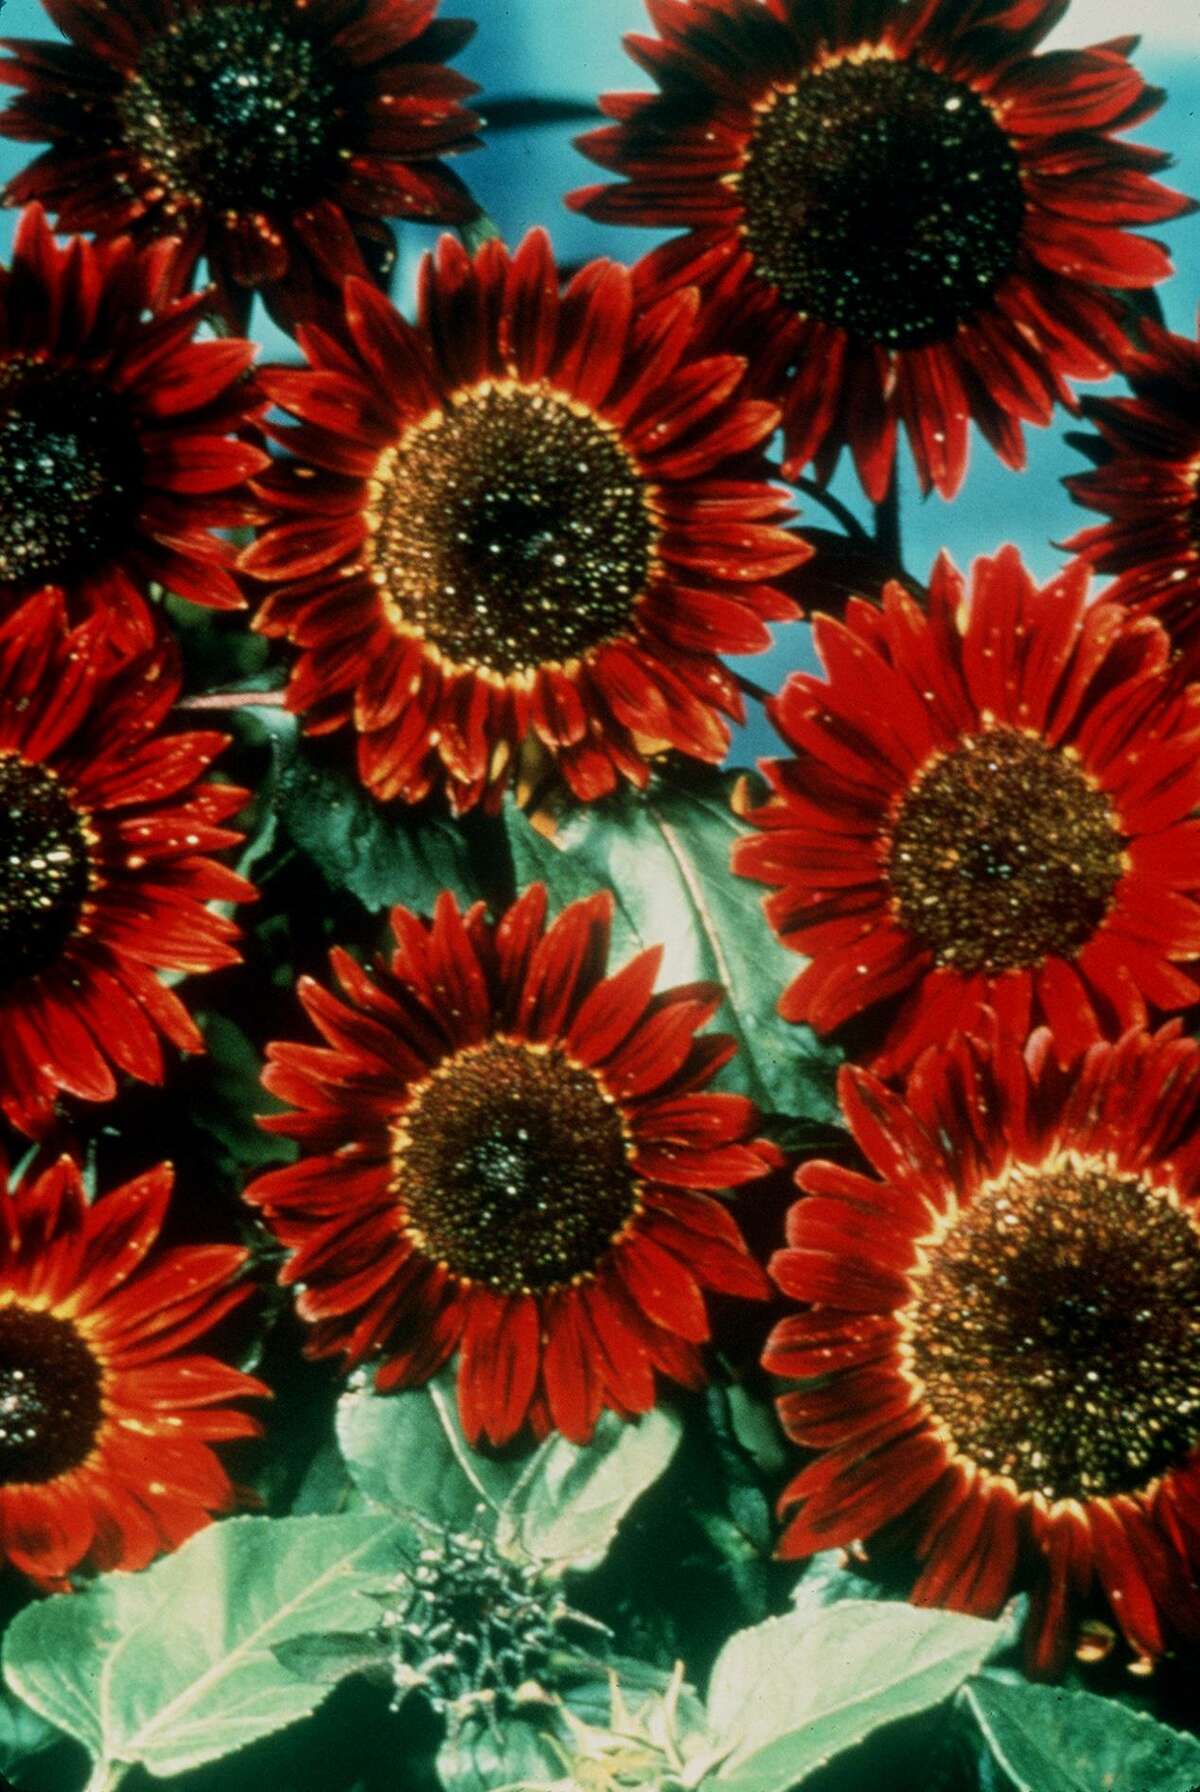 Burpee sells seeds for the “Prado Red” sunflower.